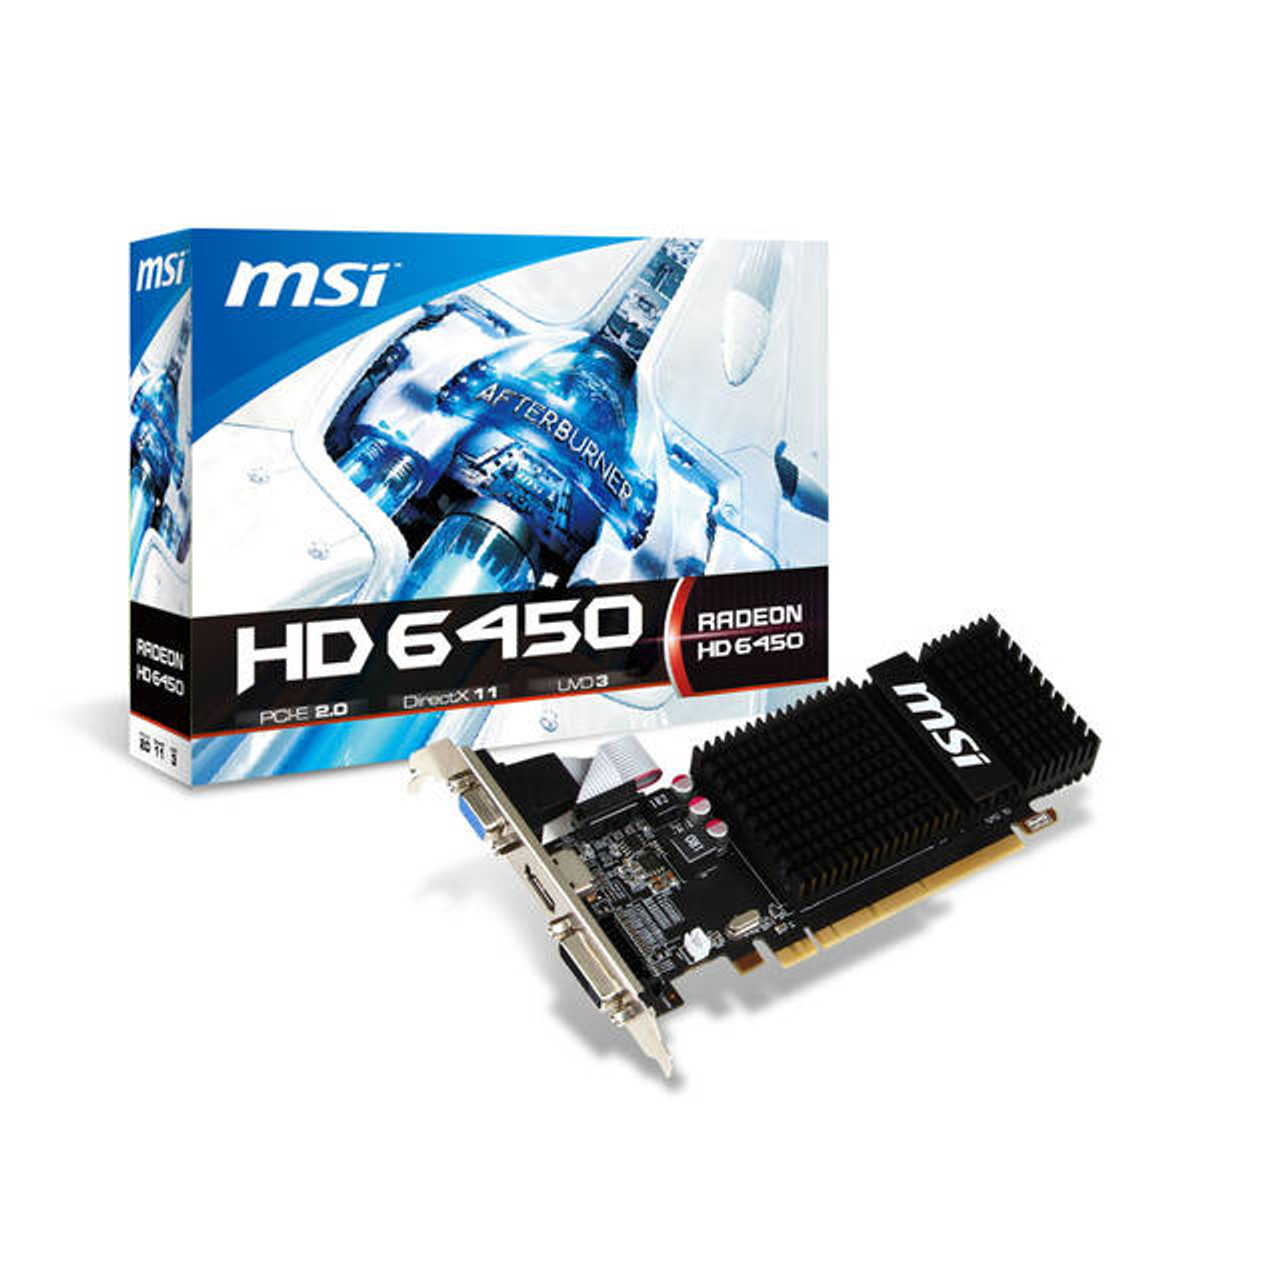 MSI AMD Radeon HD 6450 2GB DDR3 VGA/DVI/HDMI Low Profile PCI-Express Video Card